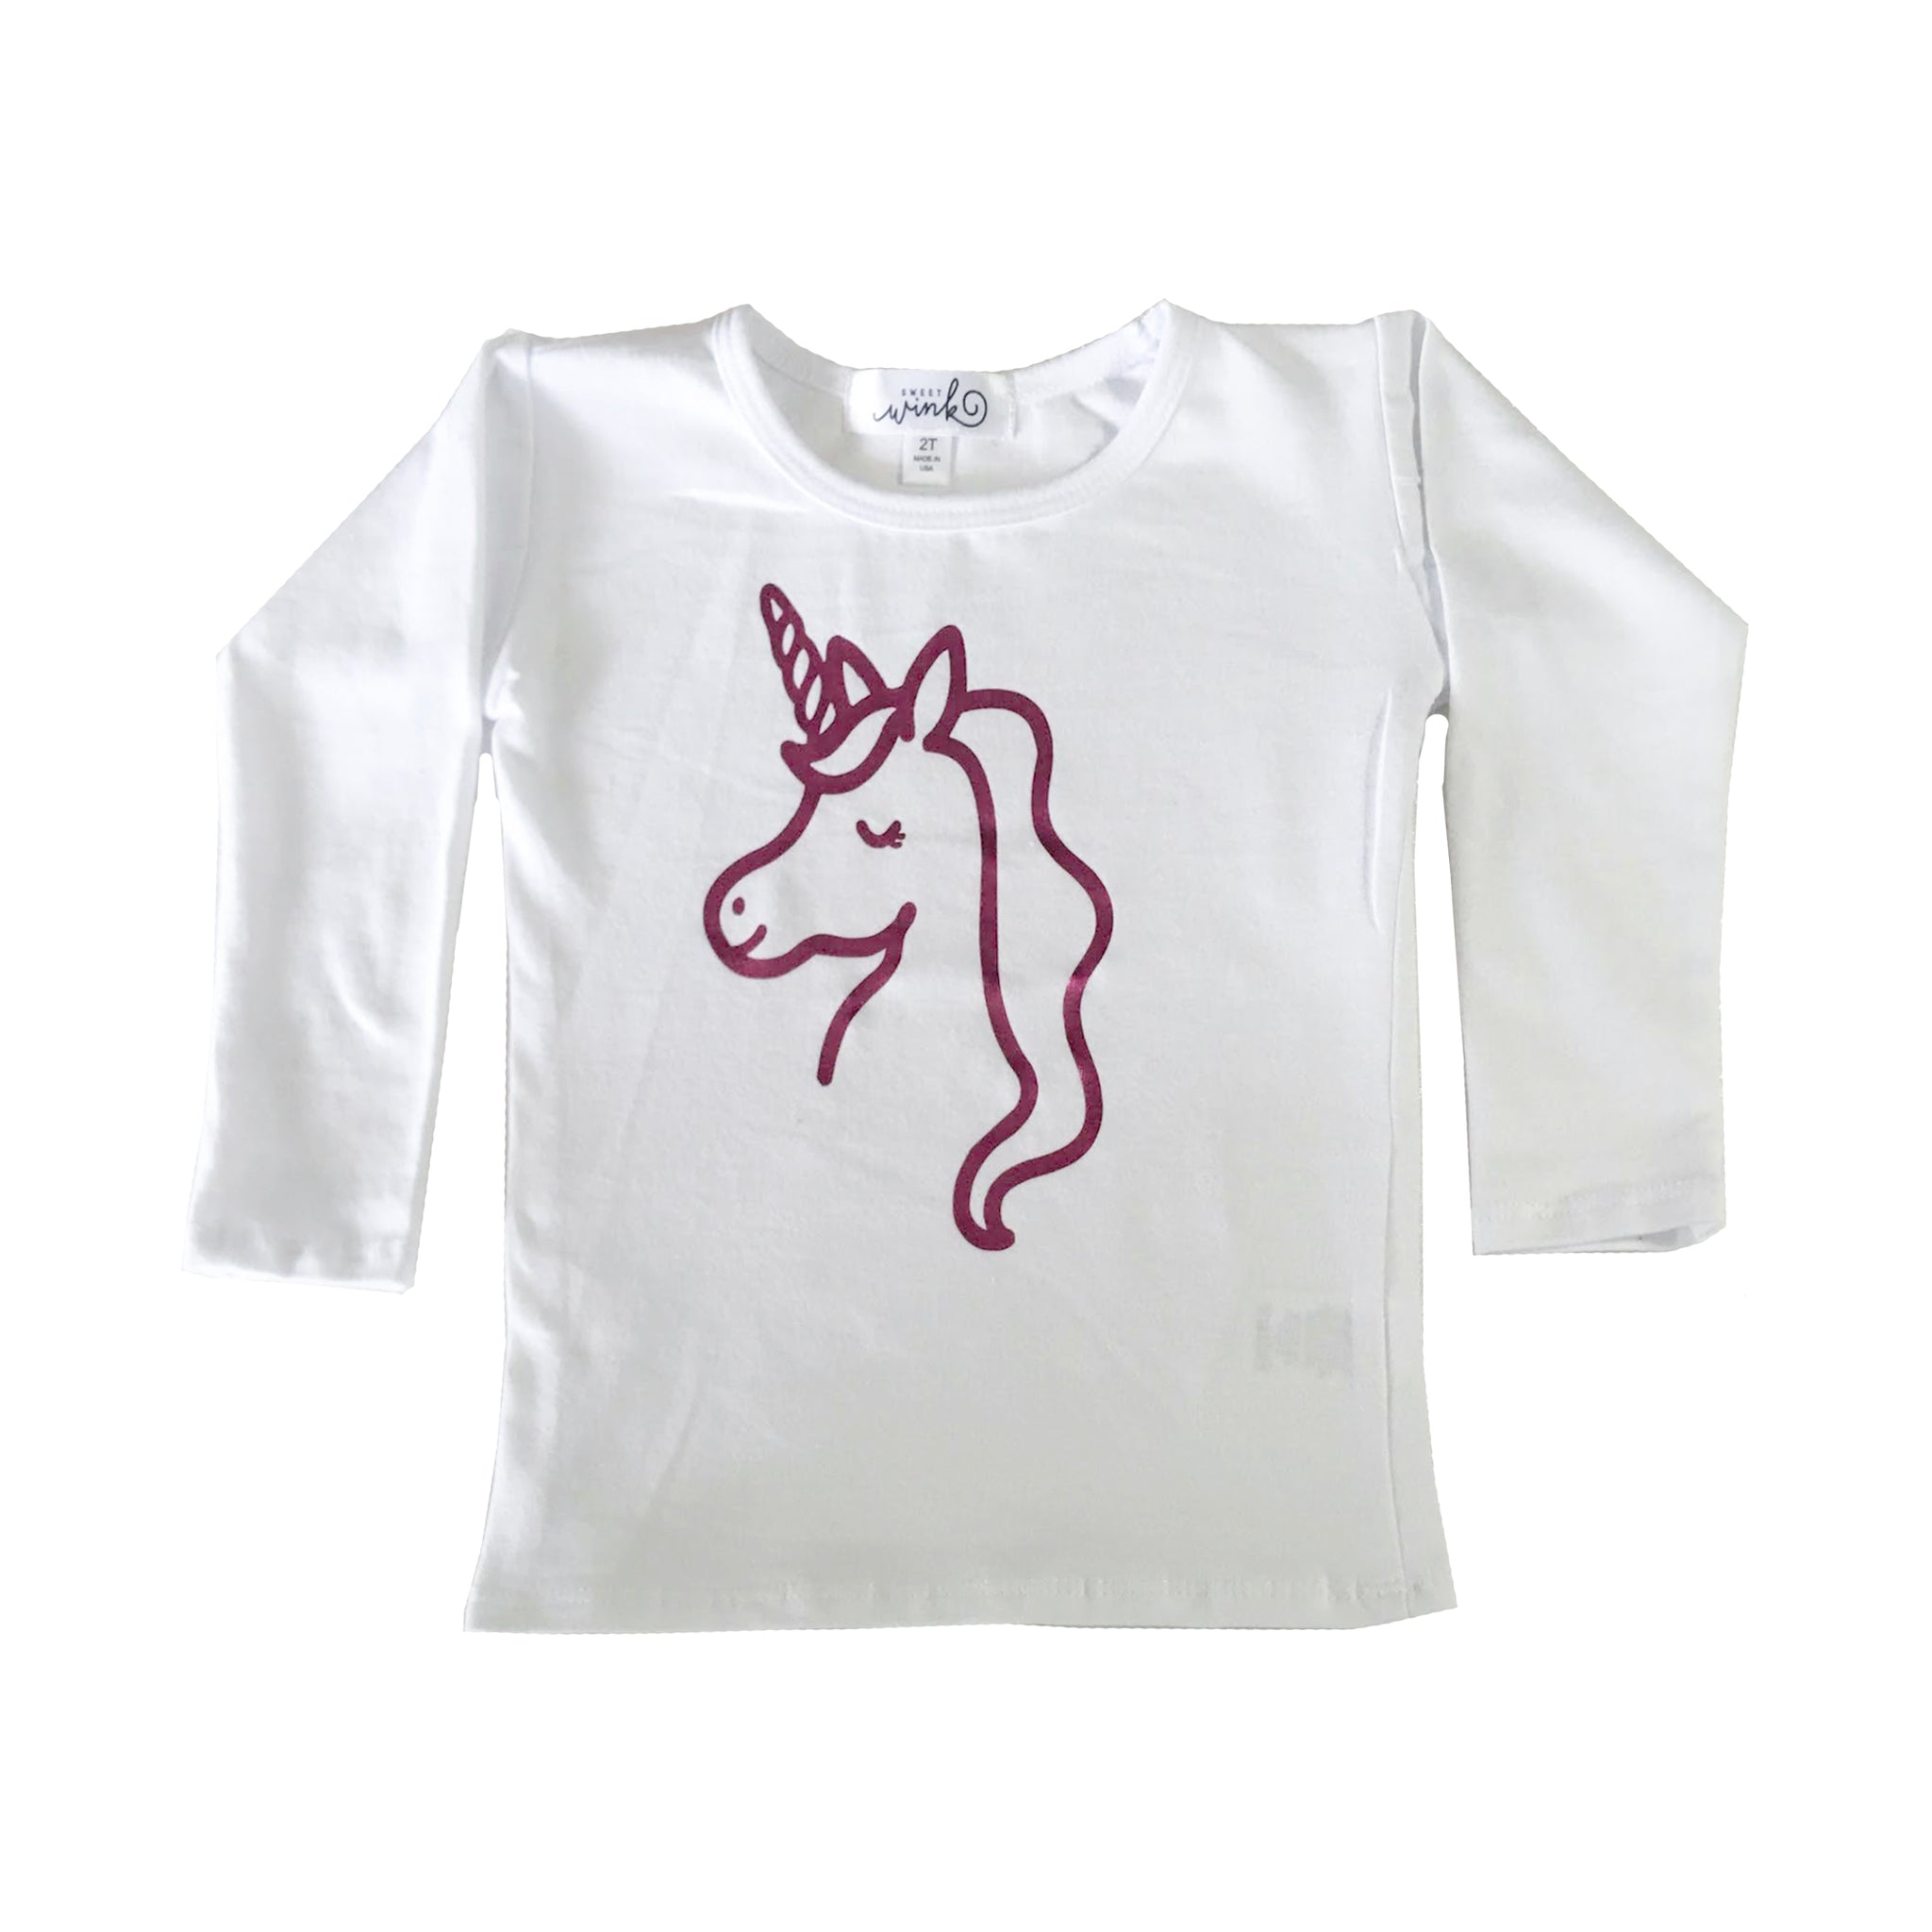 Sweet Wink Girls Unicorn T-shirt, Sizes 2T, 3T